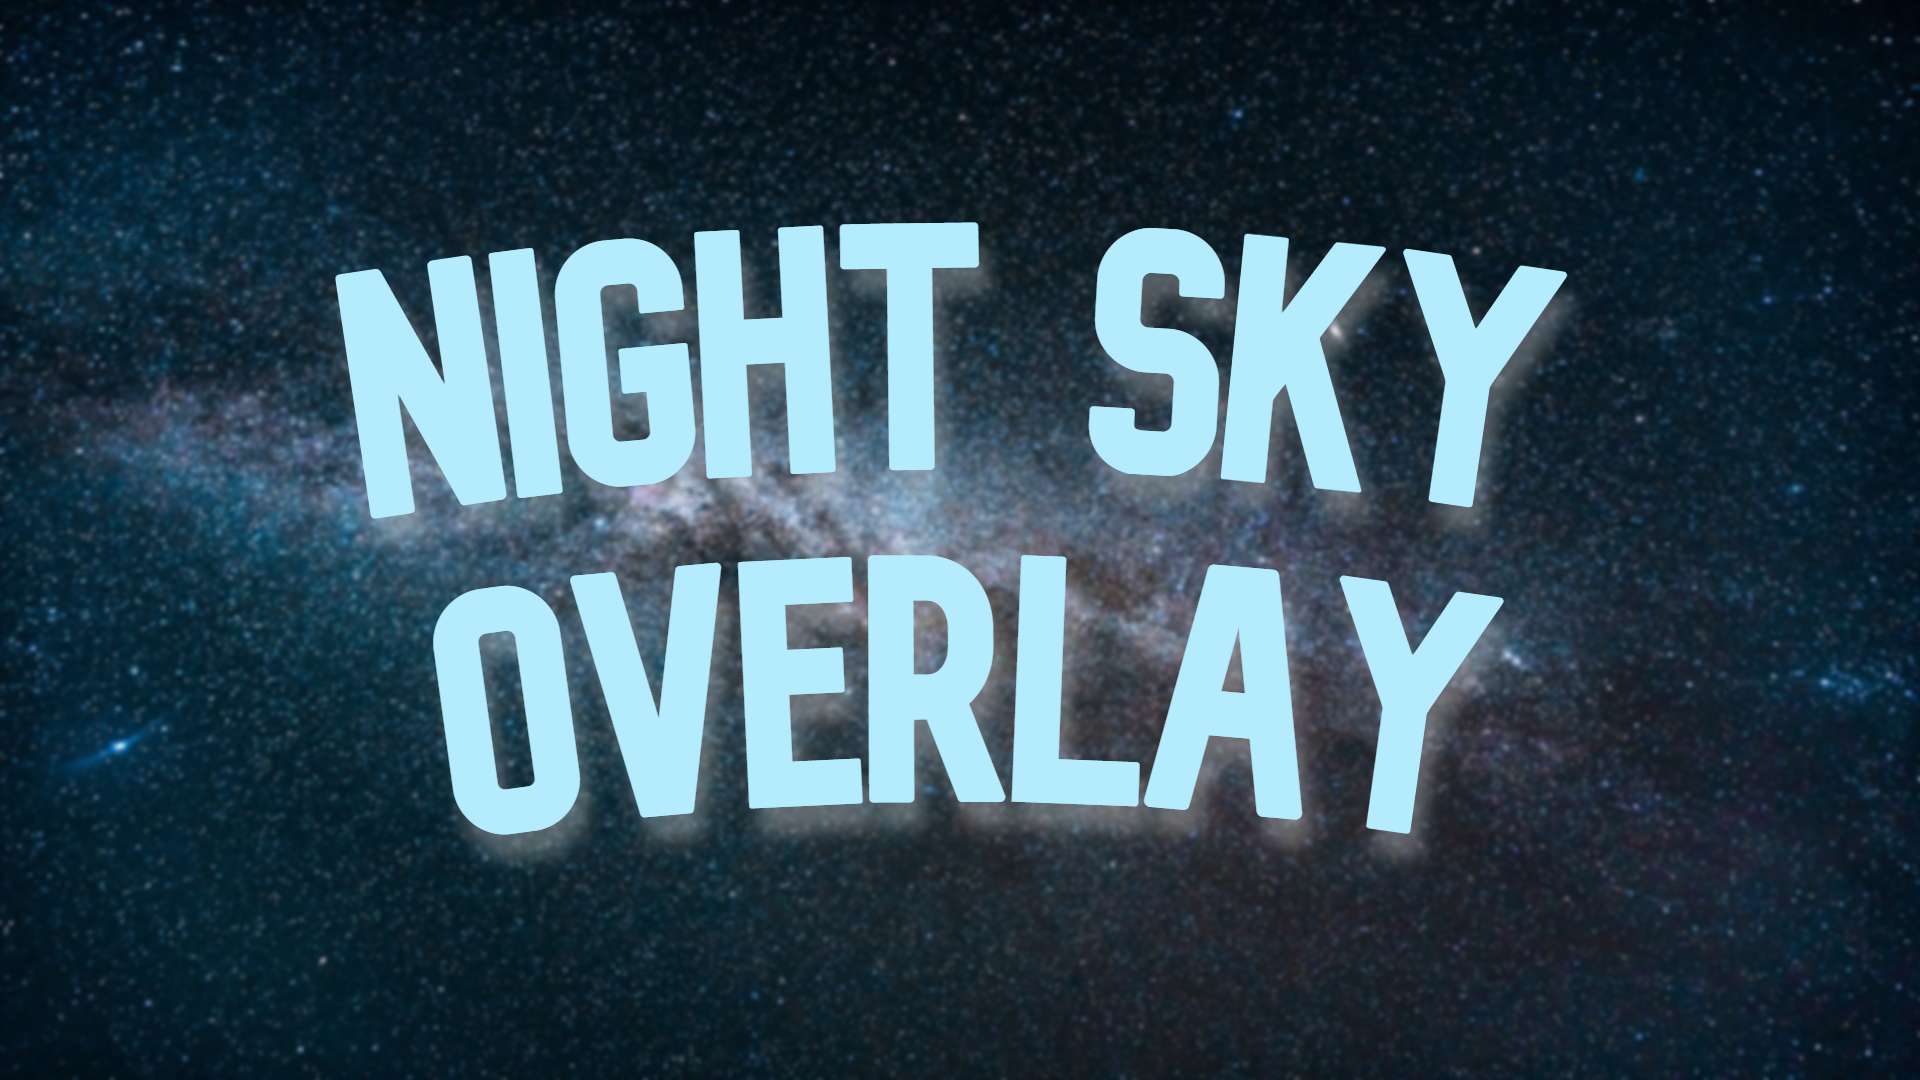 Night Sky Overlay #3 16 by rh56 on PvPRP